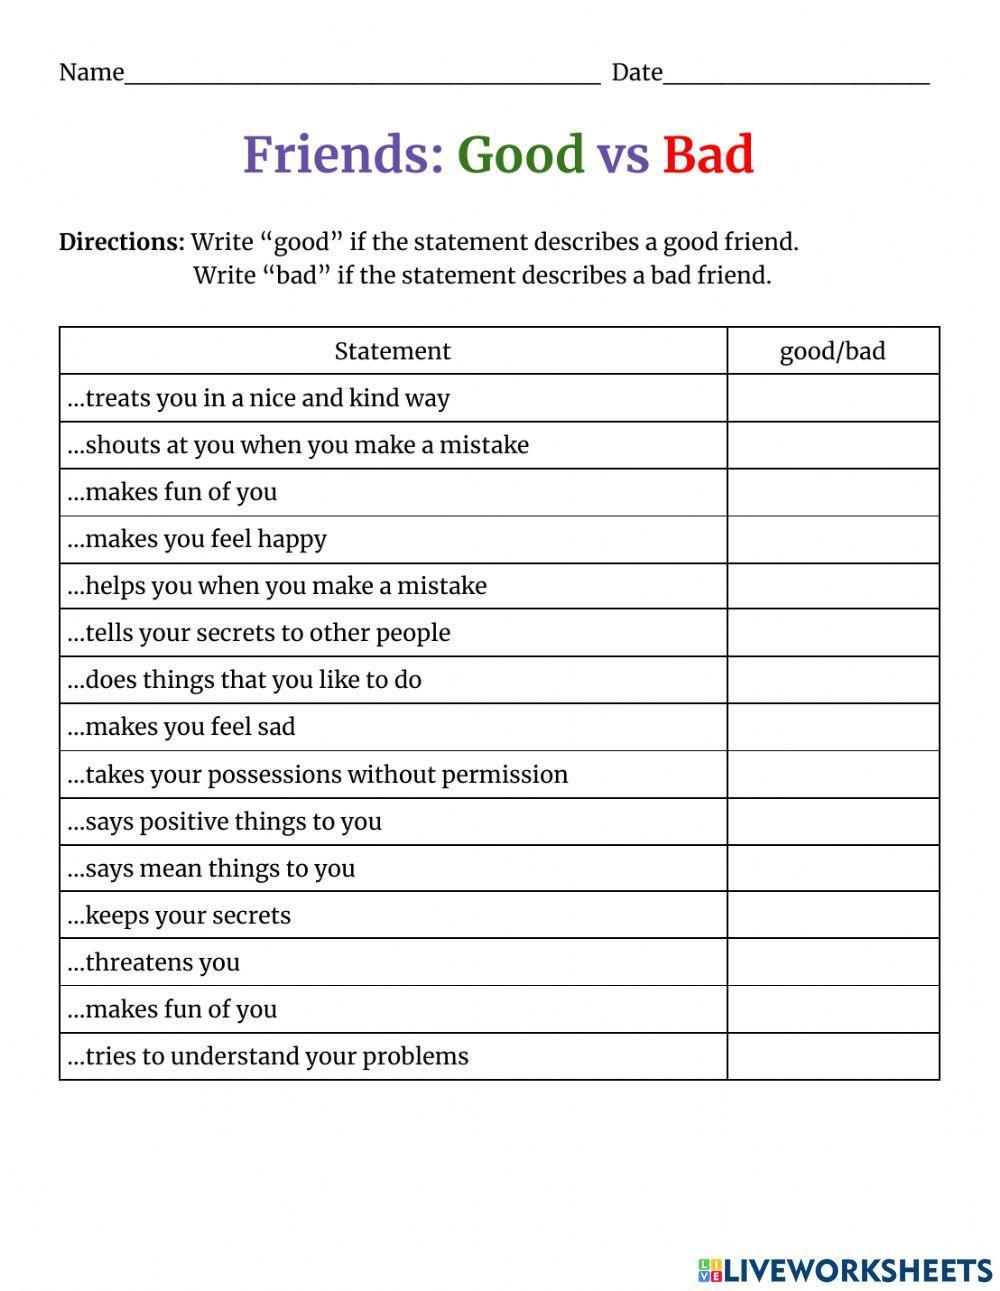 Friends: Good vs Bad